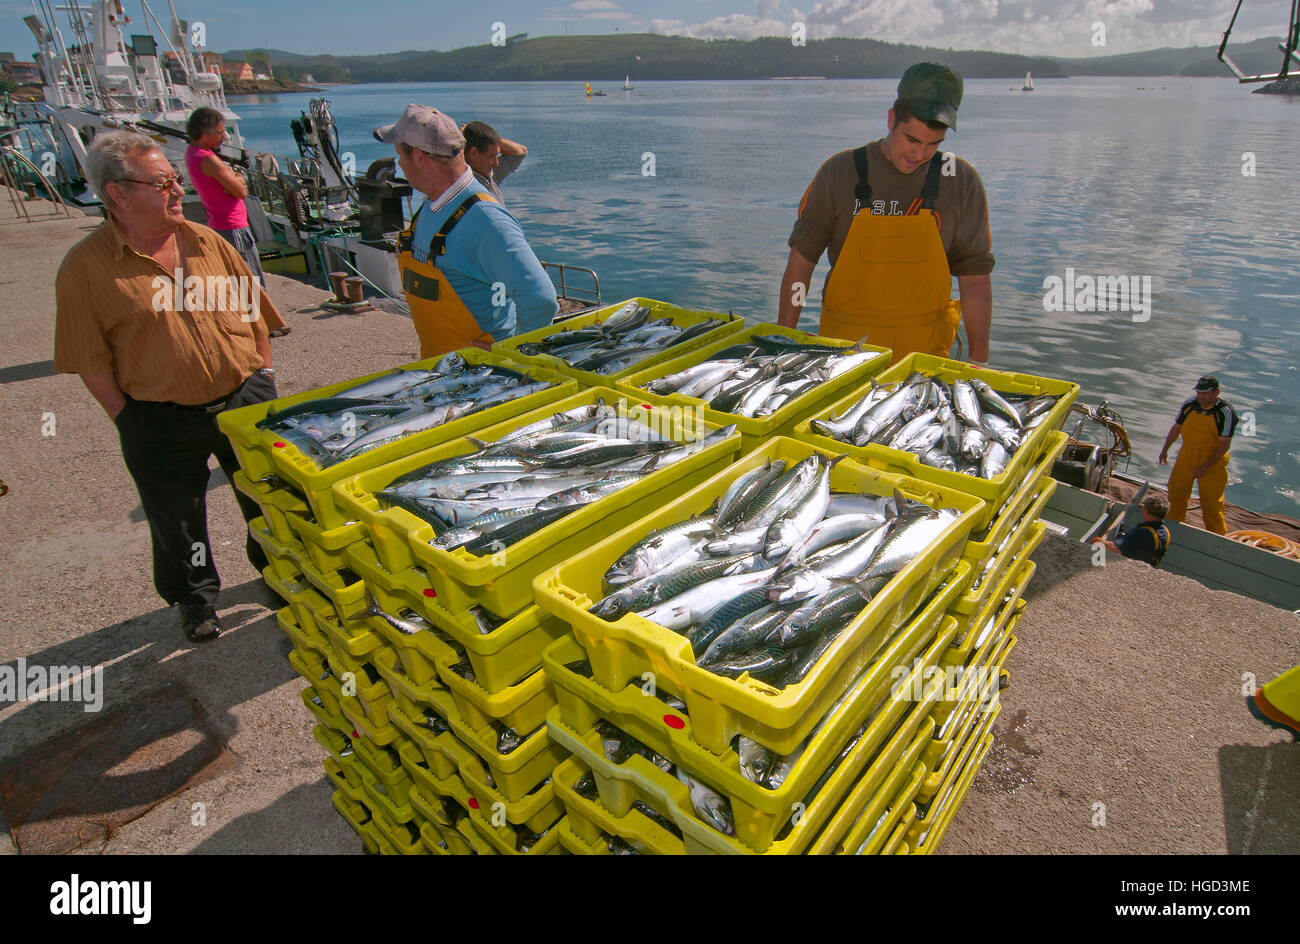 Fishing boat unloading the boxes of fish, Mackerel boxes, Camarinas, La Coruna province, Region of Galicia, Spain, Europe Stock Photo